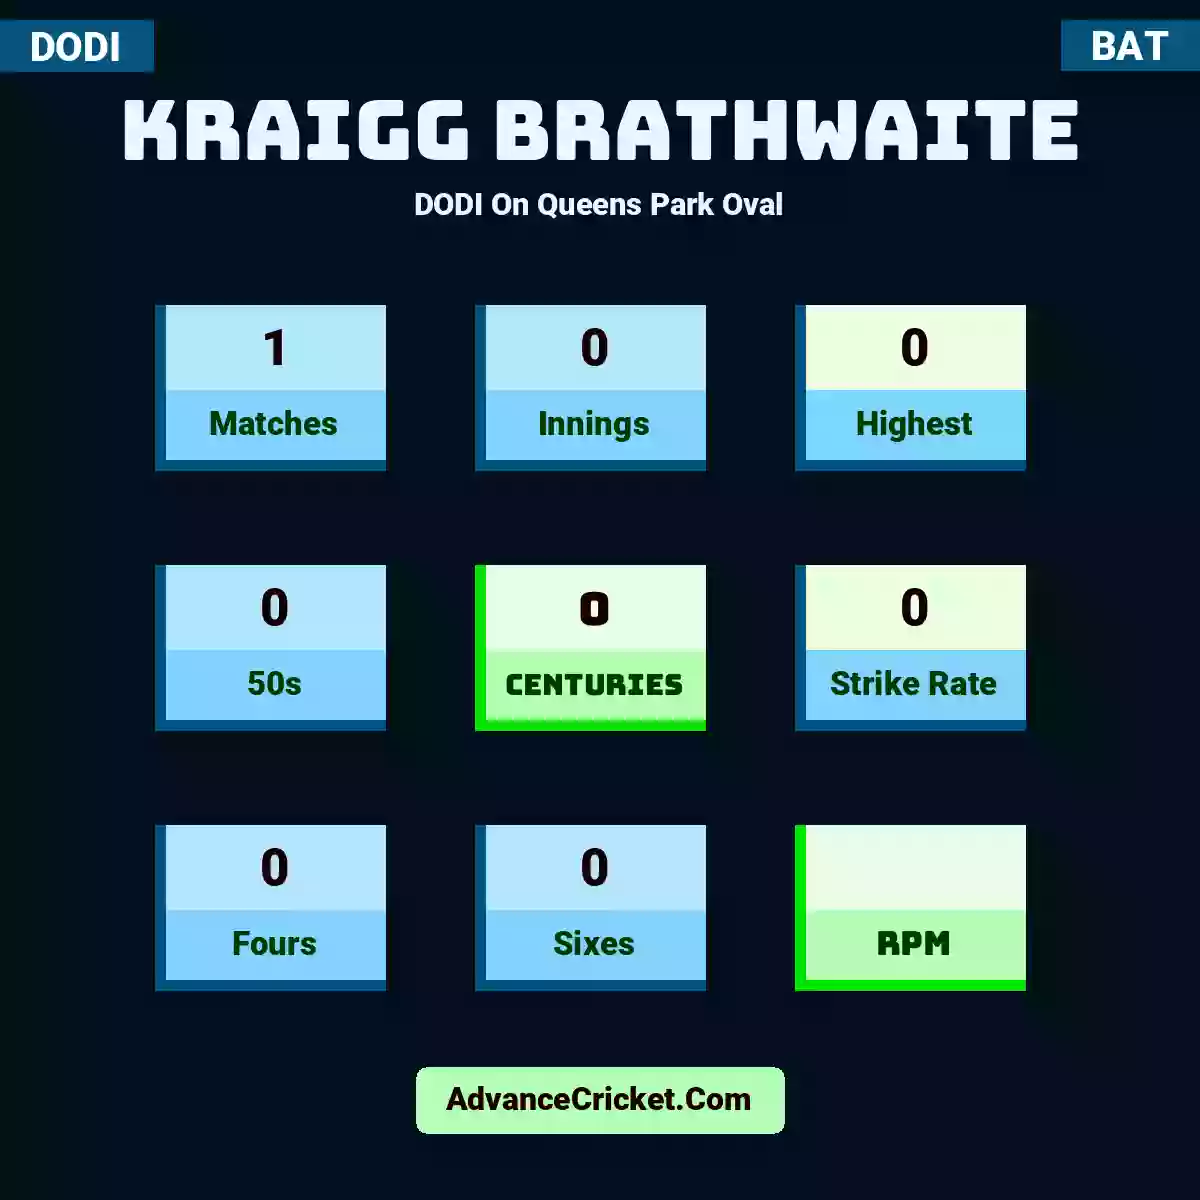 Kraigg Brathwaite DODI  On Queens Park Oval, Kraigg Brathwaite played 1 matches, scored 0 runs as highest, 0 half-centuries, and 0 centuries, with a strike rate of 0. K.Brathwaite hit 0 fours and 0 sixes.